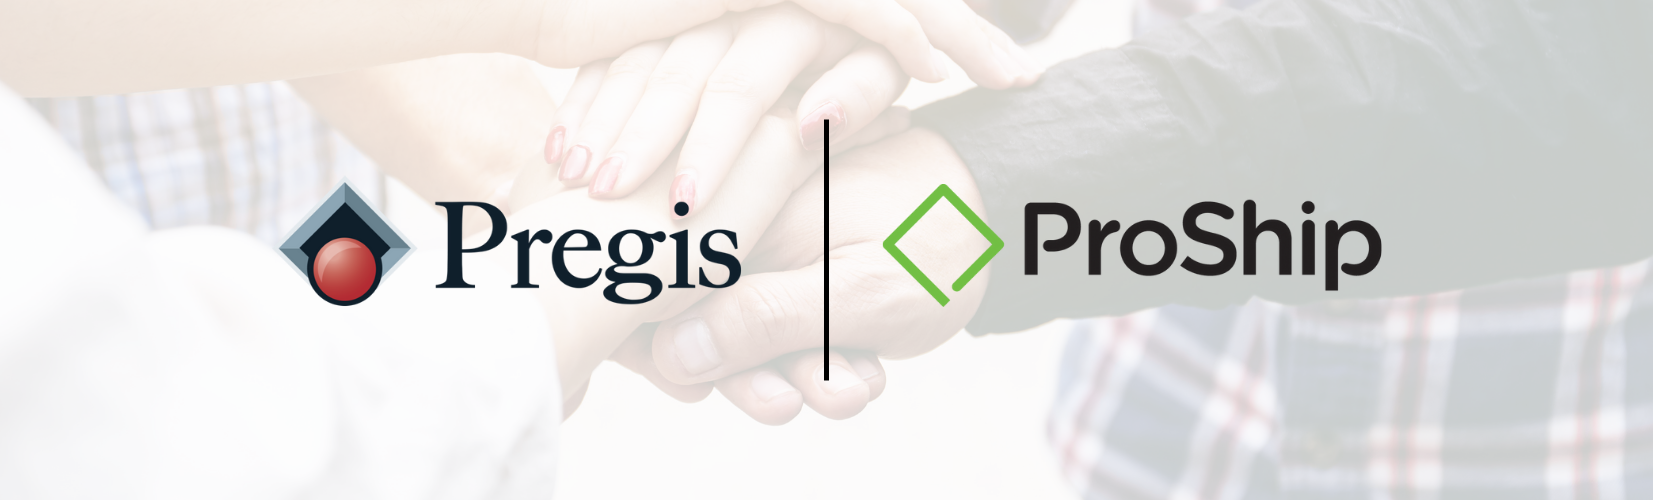 Pregis and ProShip logos together